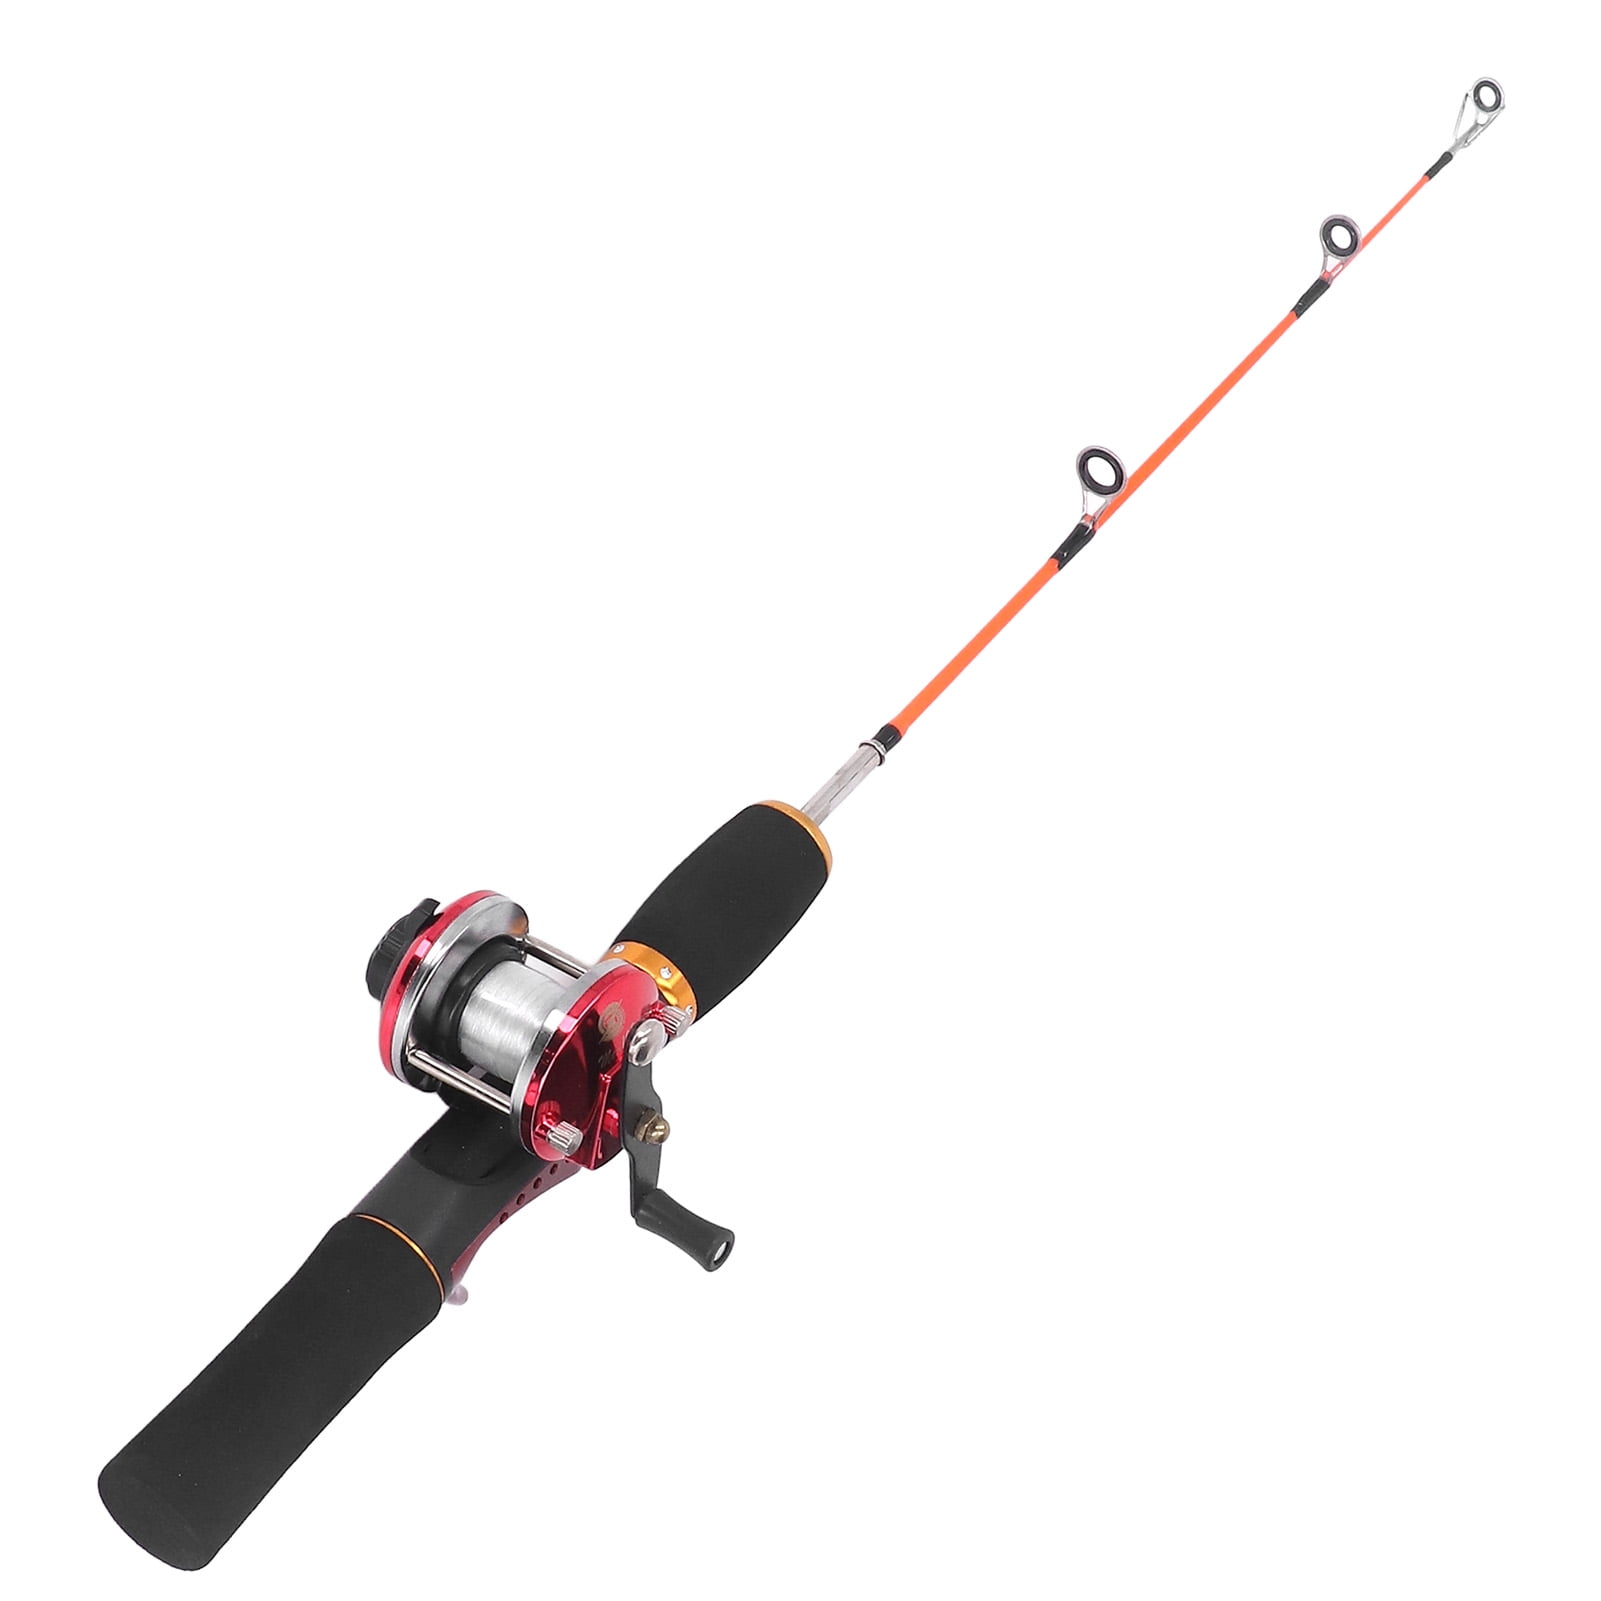 56cm Ice Fishing Rod, Comfortable Ice Fishing Rod Reel Combo For